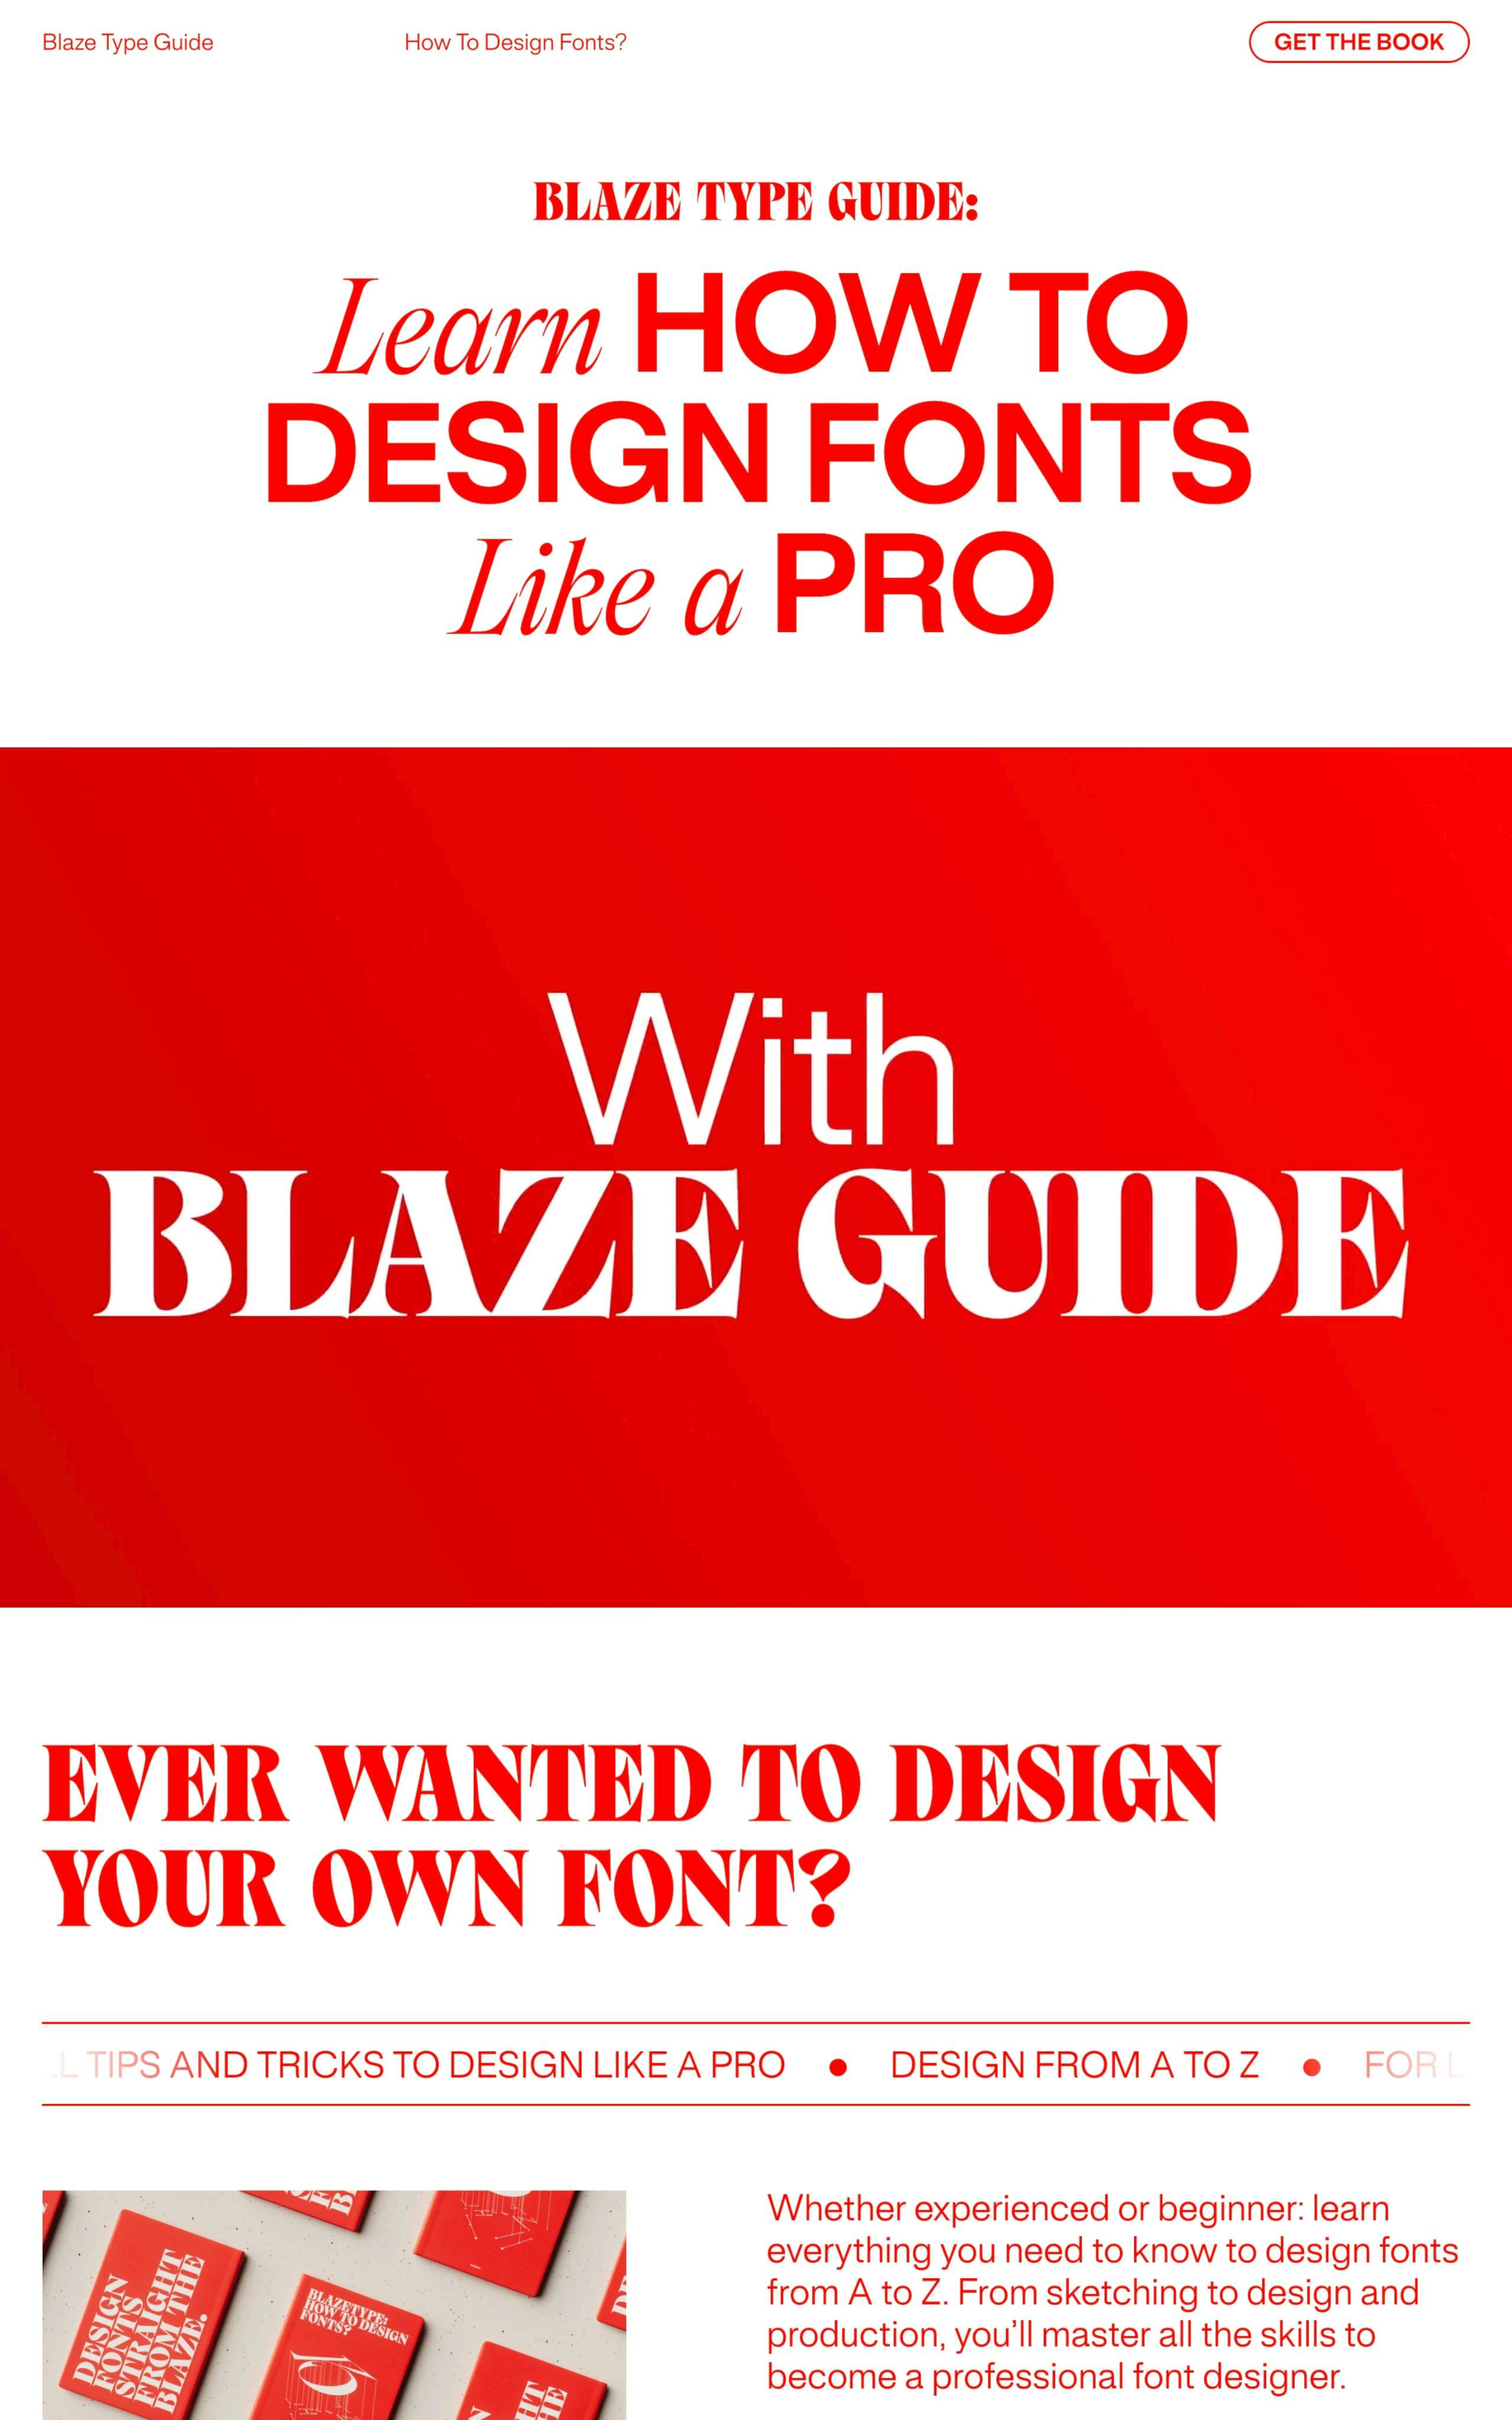 Blaze Type Guide Website Screenshot